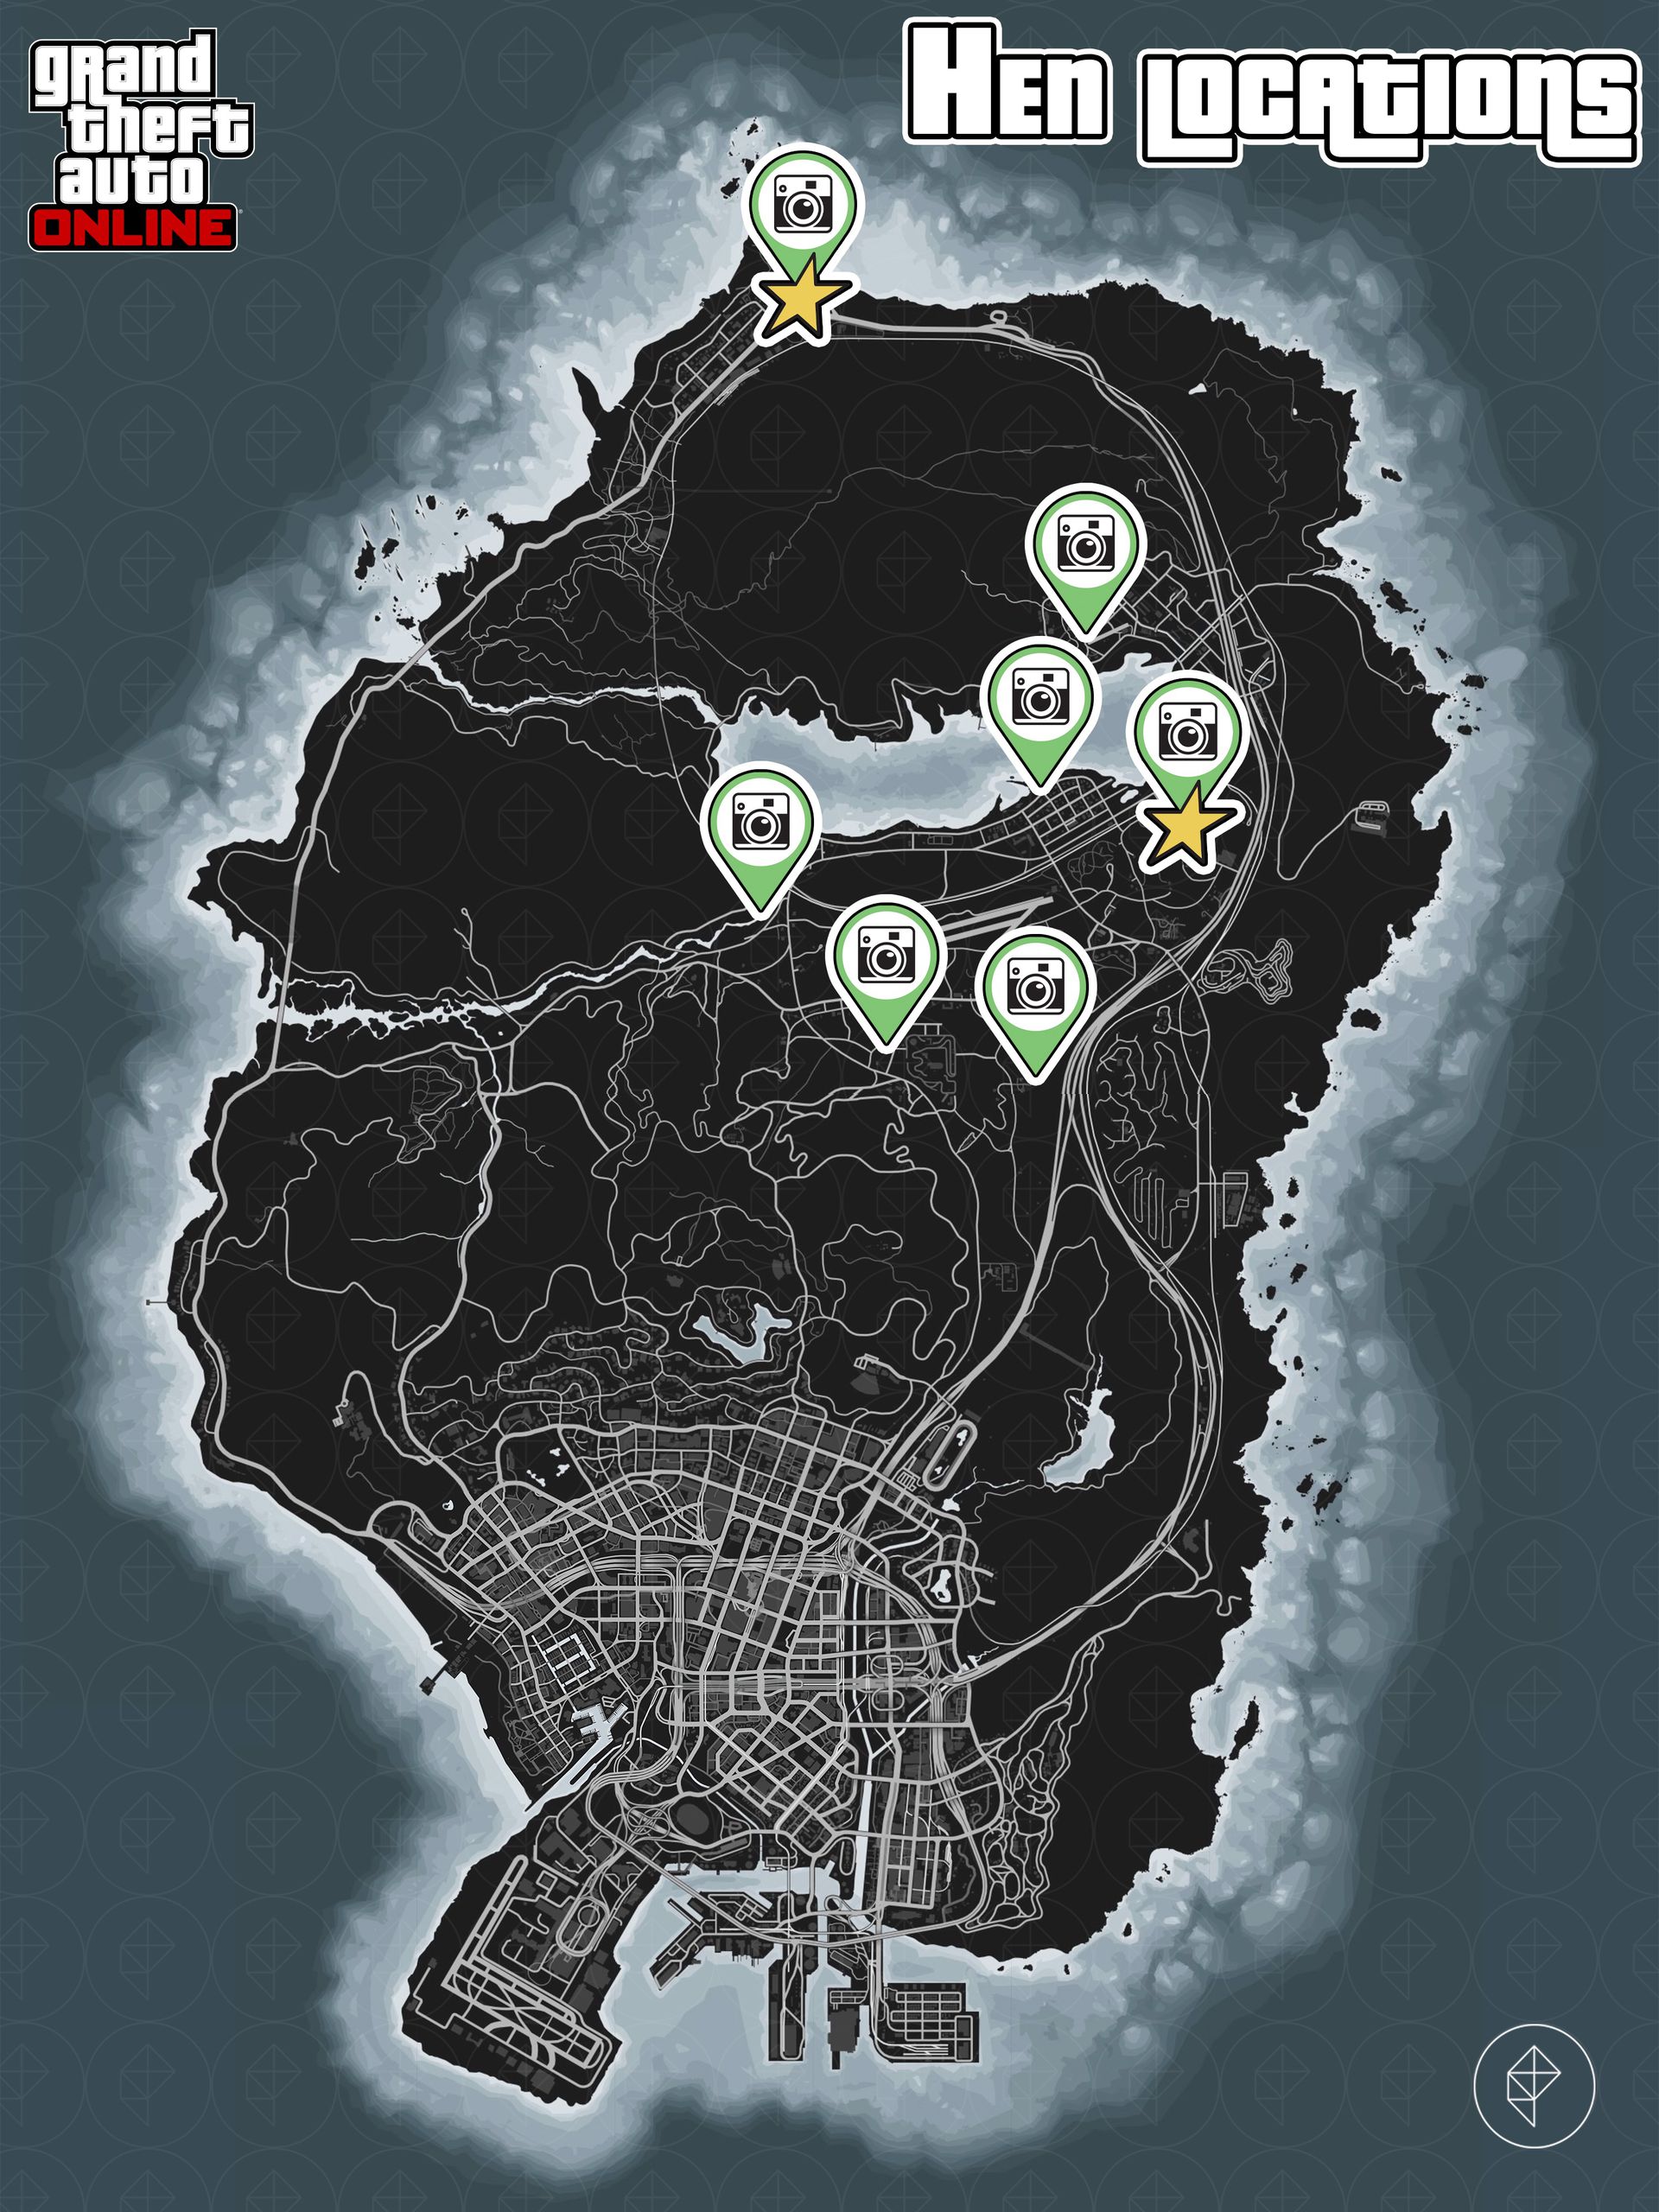 GTA Online map showing hen locations